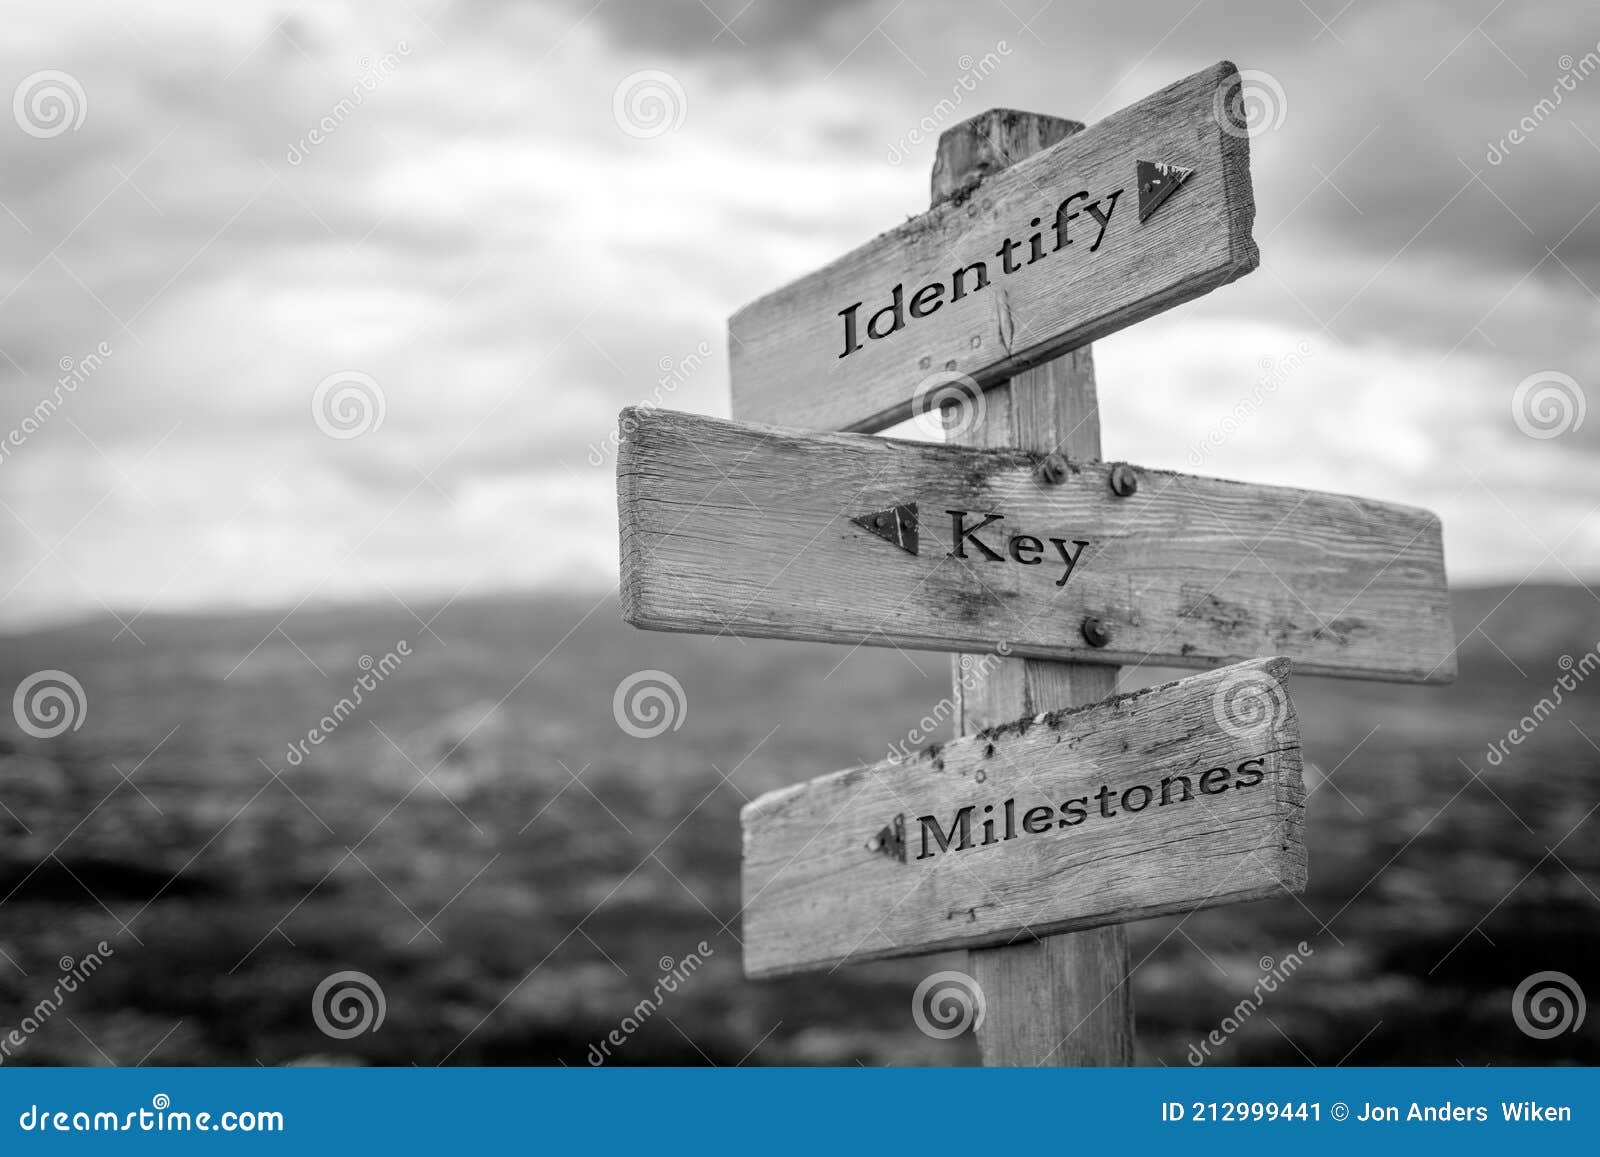 identify key milestones text quote on wooden signpost